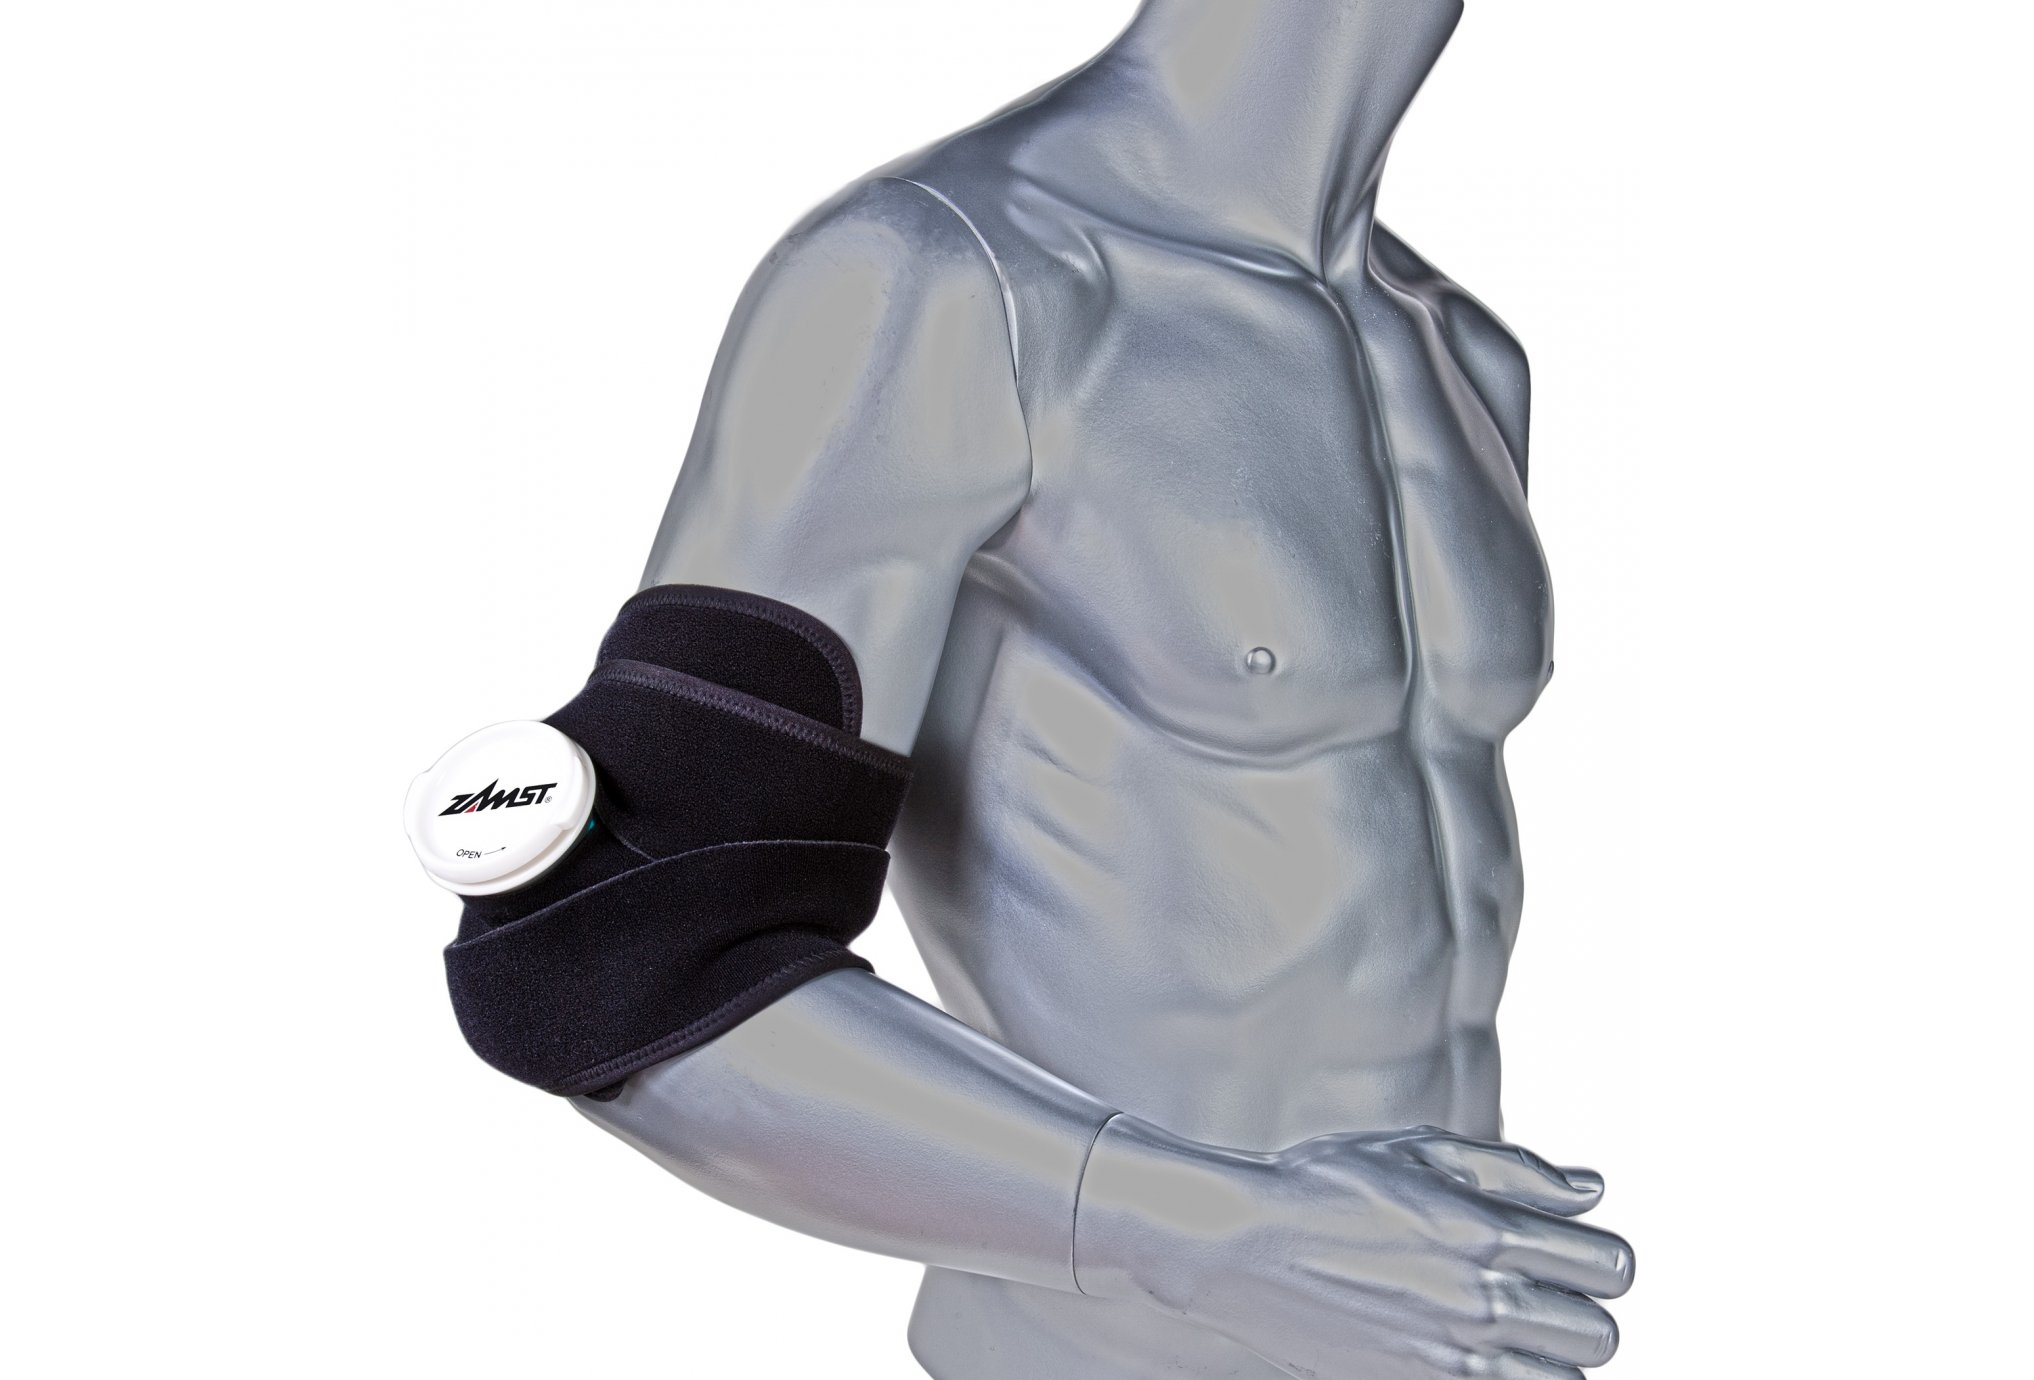 Zamst Kit de poche à glace IW-1 Protection musculaire & articulaire